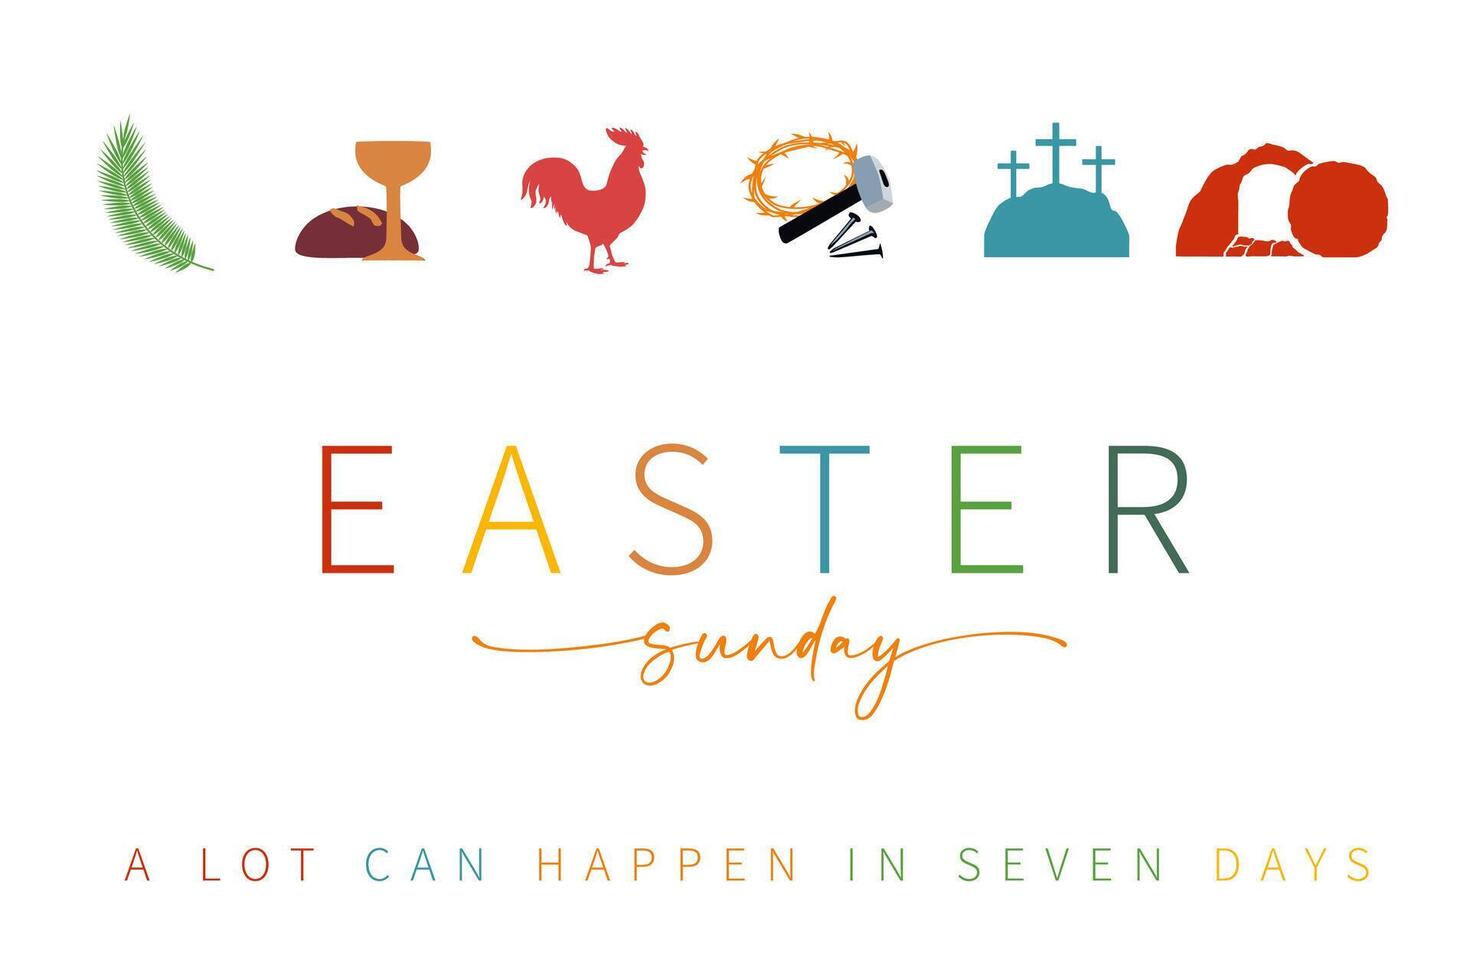 Easter Sunday greeting card. Set of Christian symbols. Vector illustration